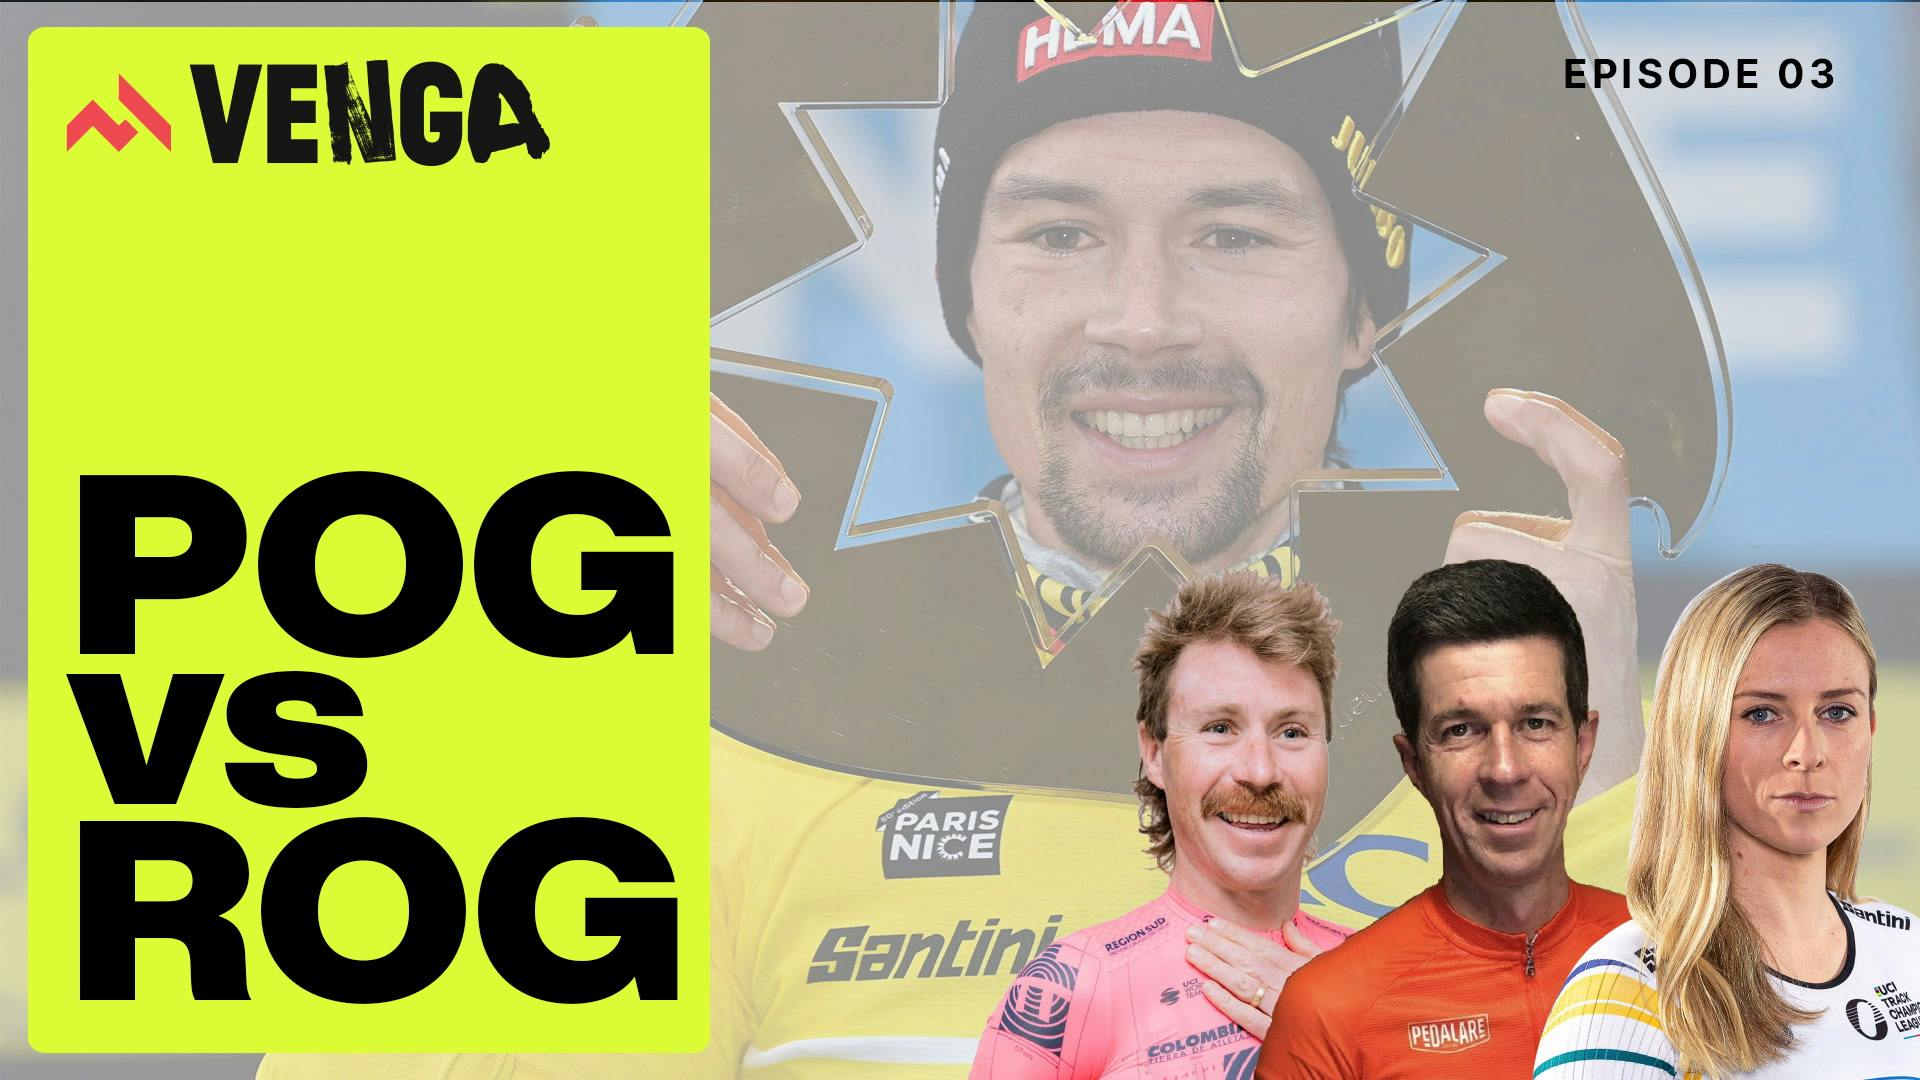 Ep 3 | VENGA: Pog vs Rog, has the battle for the Tour de France already begun?